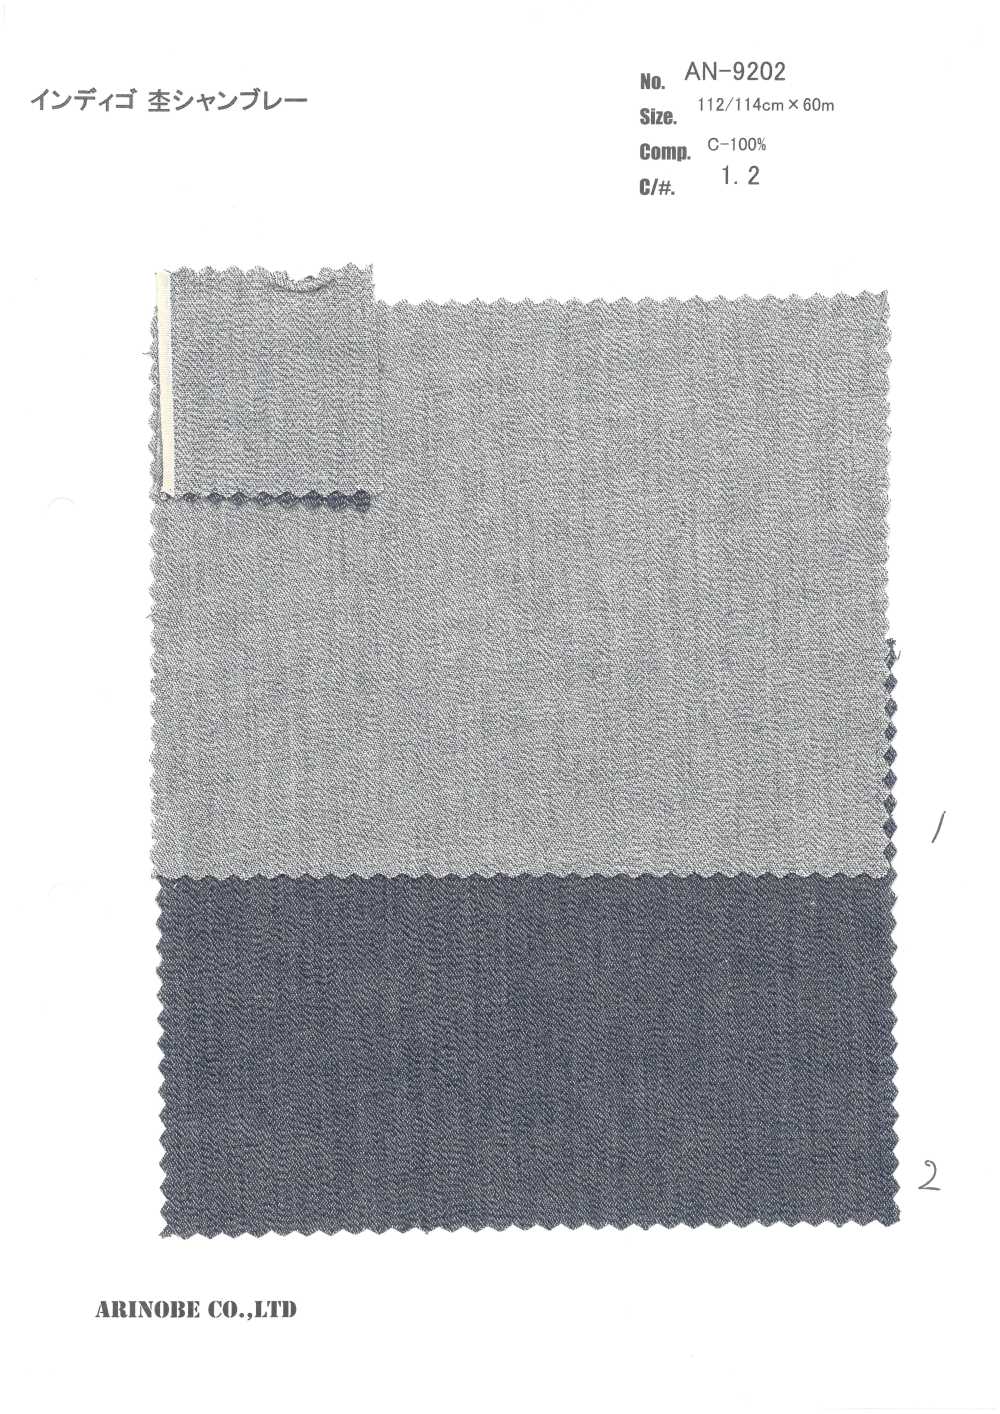 AN-9202 Indigo Heather Chambray[Textilgewebe] ARINOBE CO., LTD.